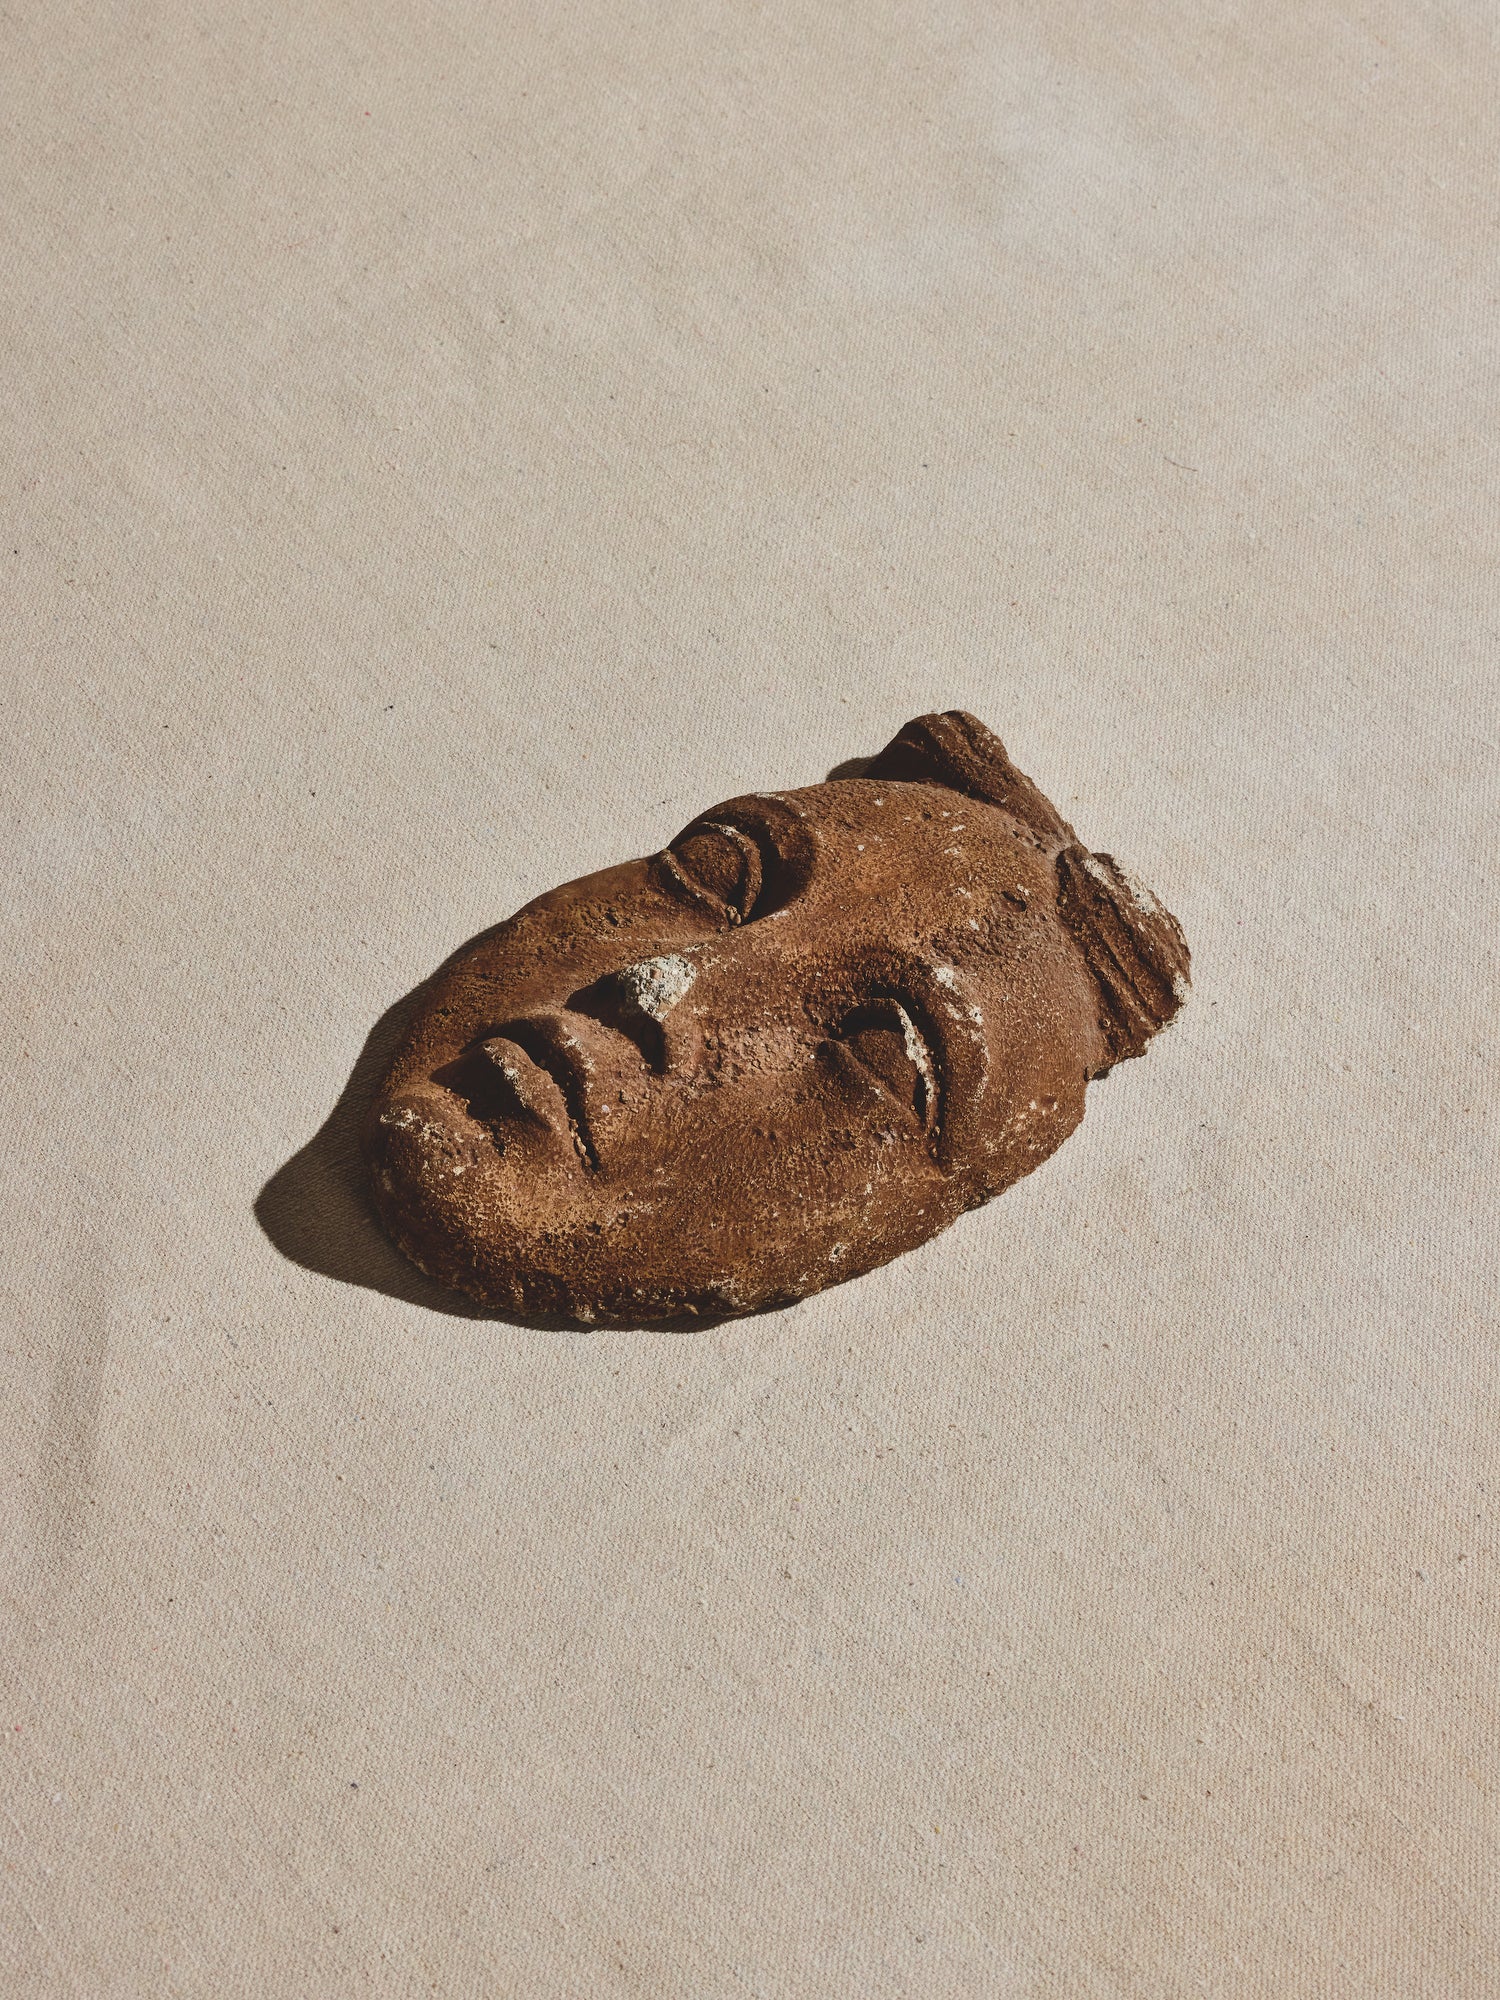 Clay Face Sculpture